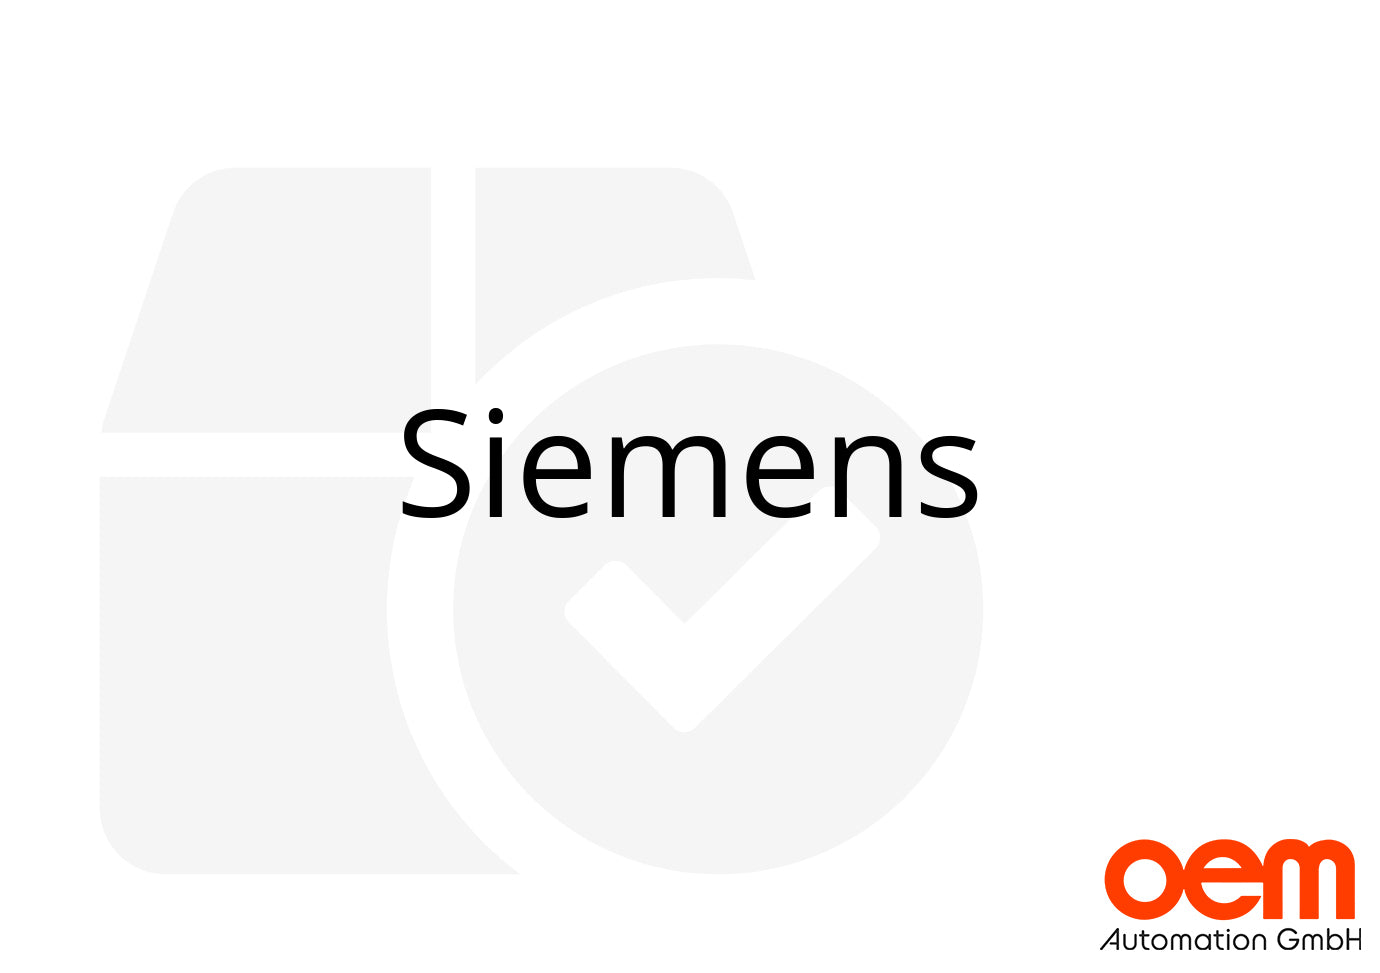 Siemens 3NA3830-7